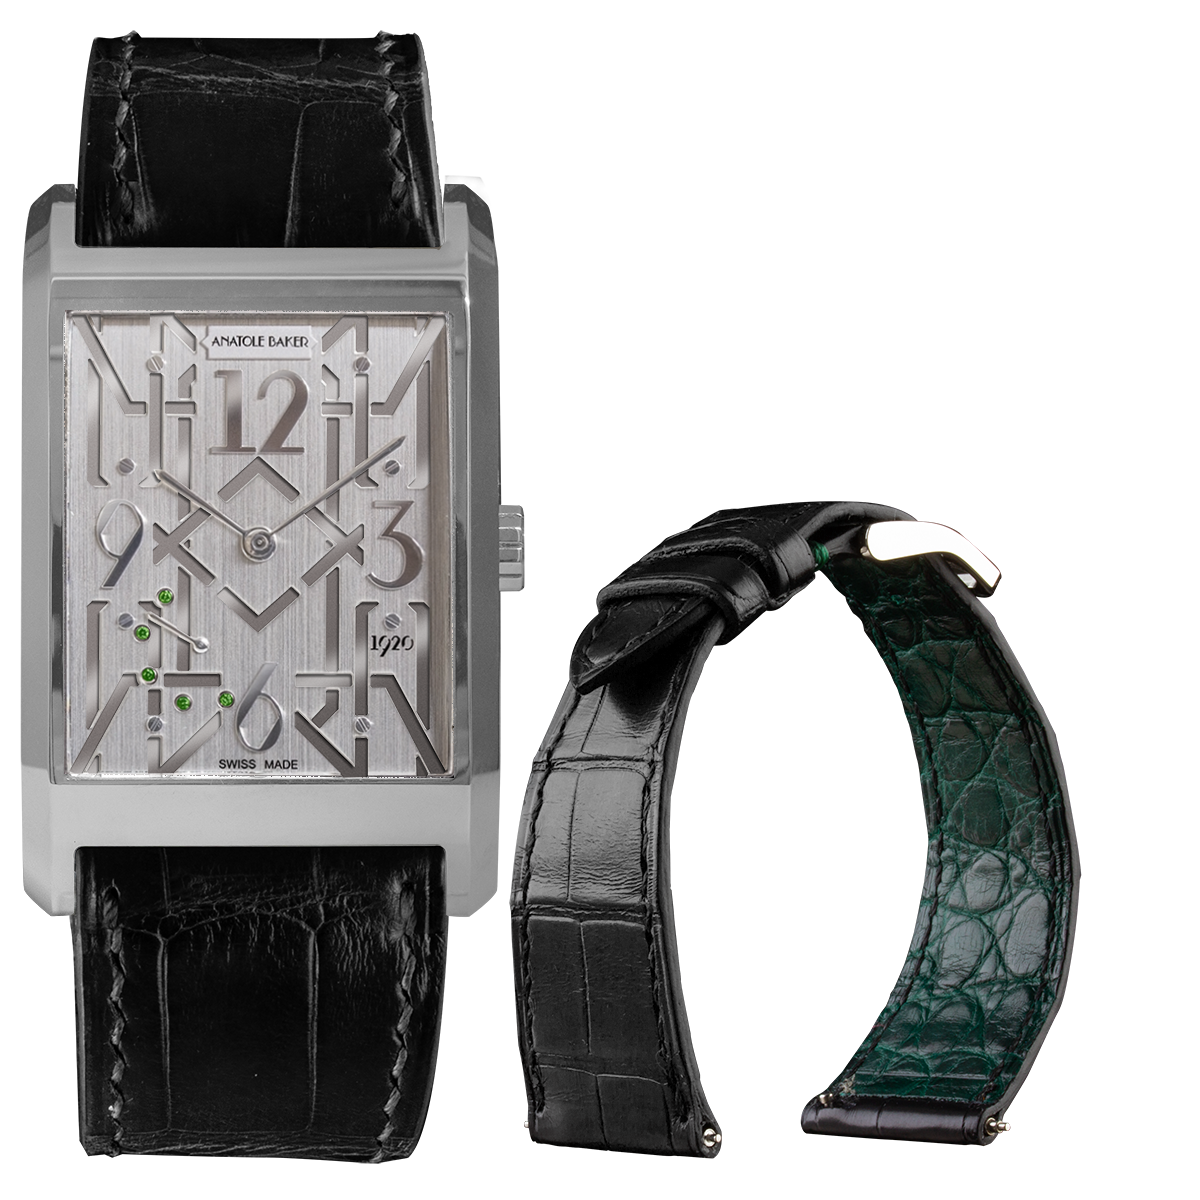 Bracelet montre cuir - Anatole Baker - Alligator noir doublure verte